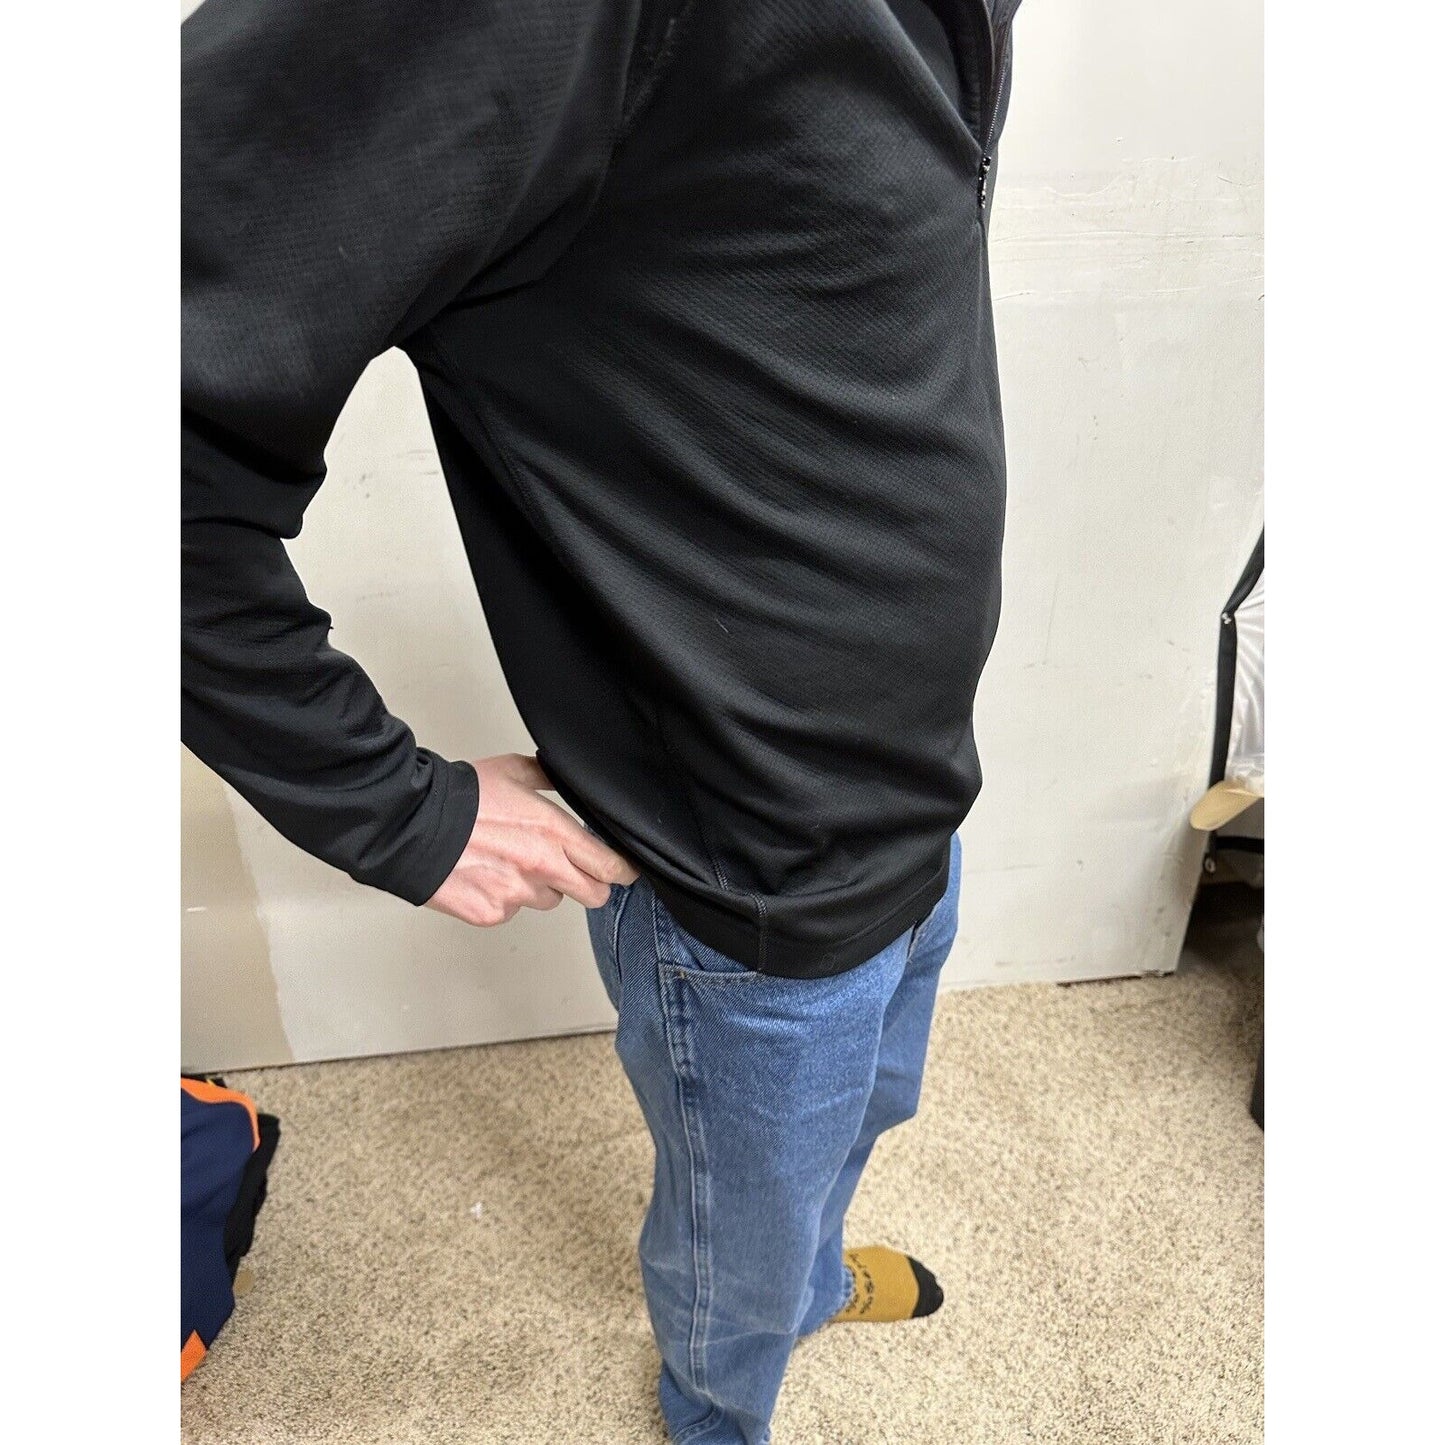 men’s dakota state trojan zone black 1/4 zip long sleeve pullover ~medium